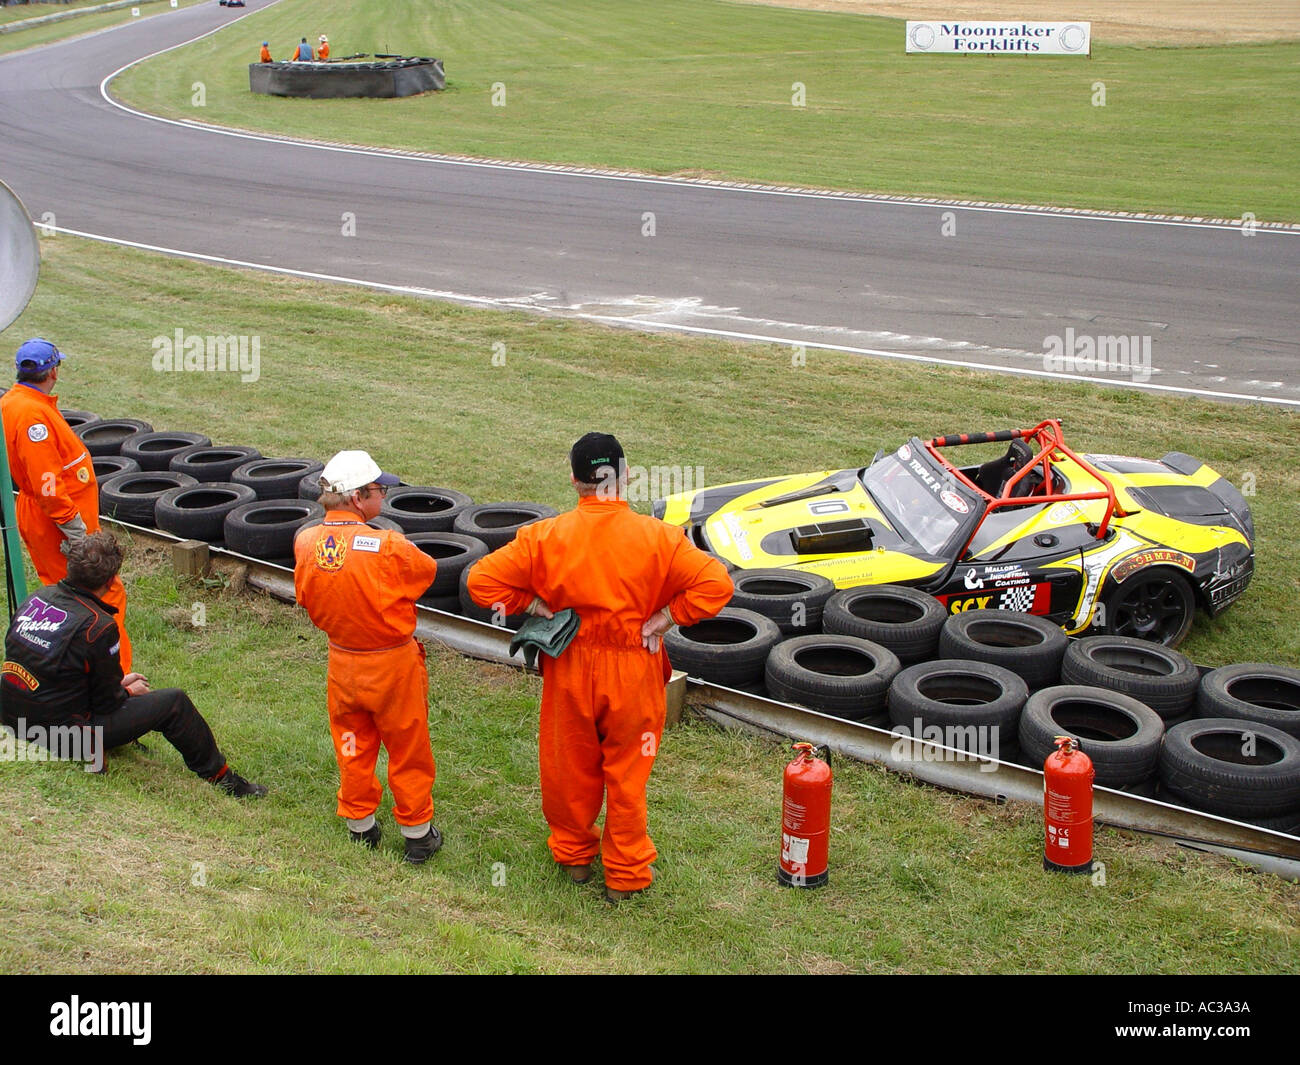 Motorsport accident at a motor racing circuit England GB UK 2003 Stock Photo